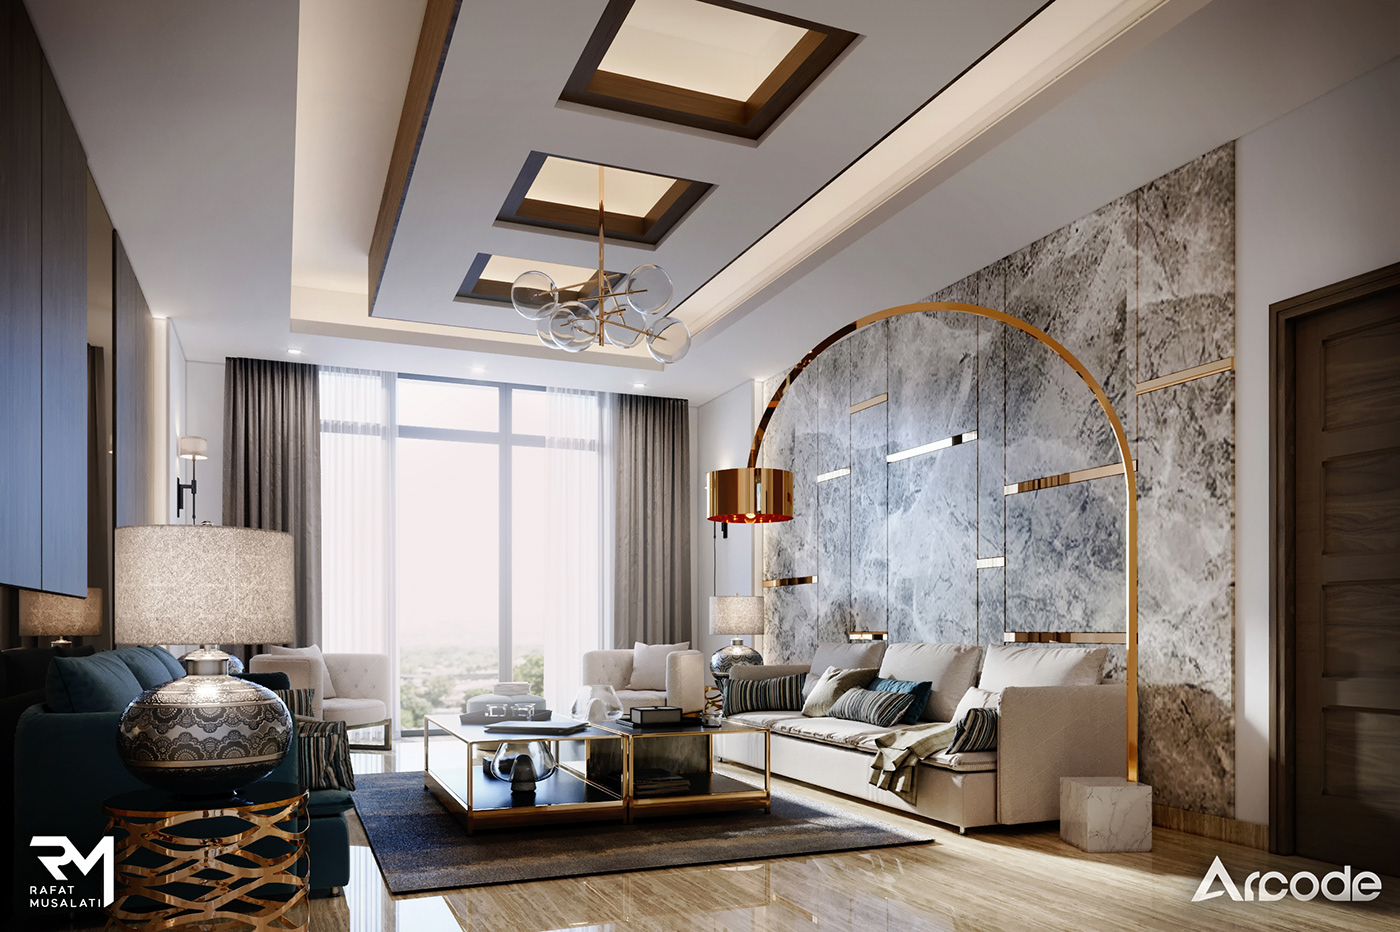 dubai UAE 3dsmax coronarenderer corona interiordesign Interior architecture modern design